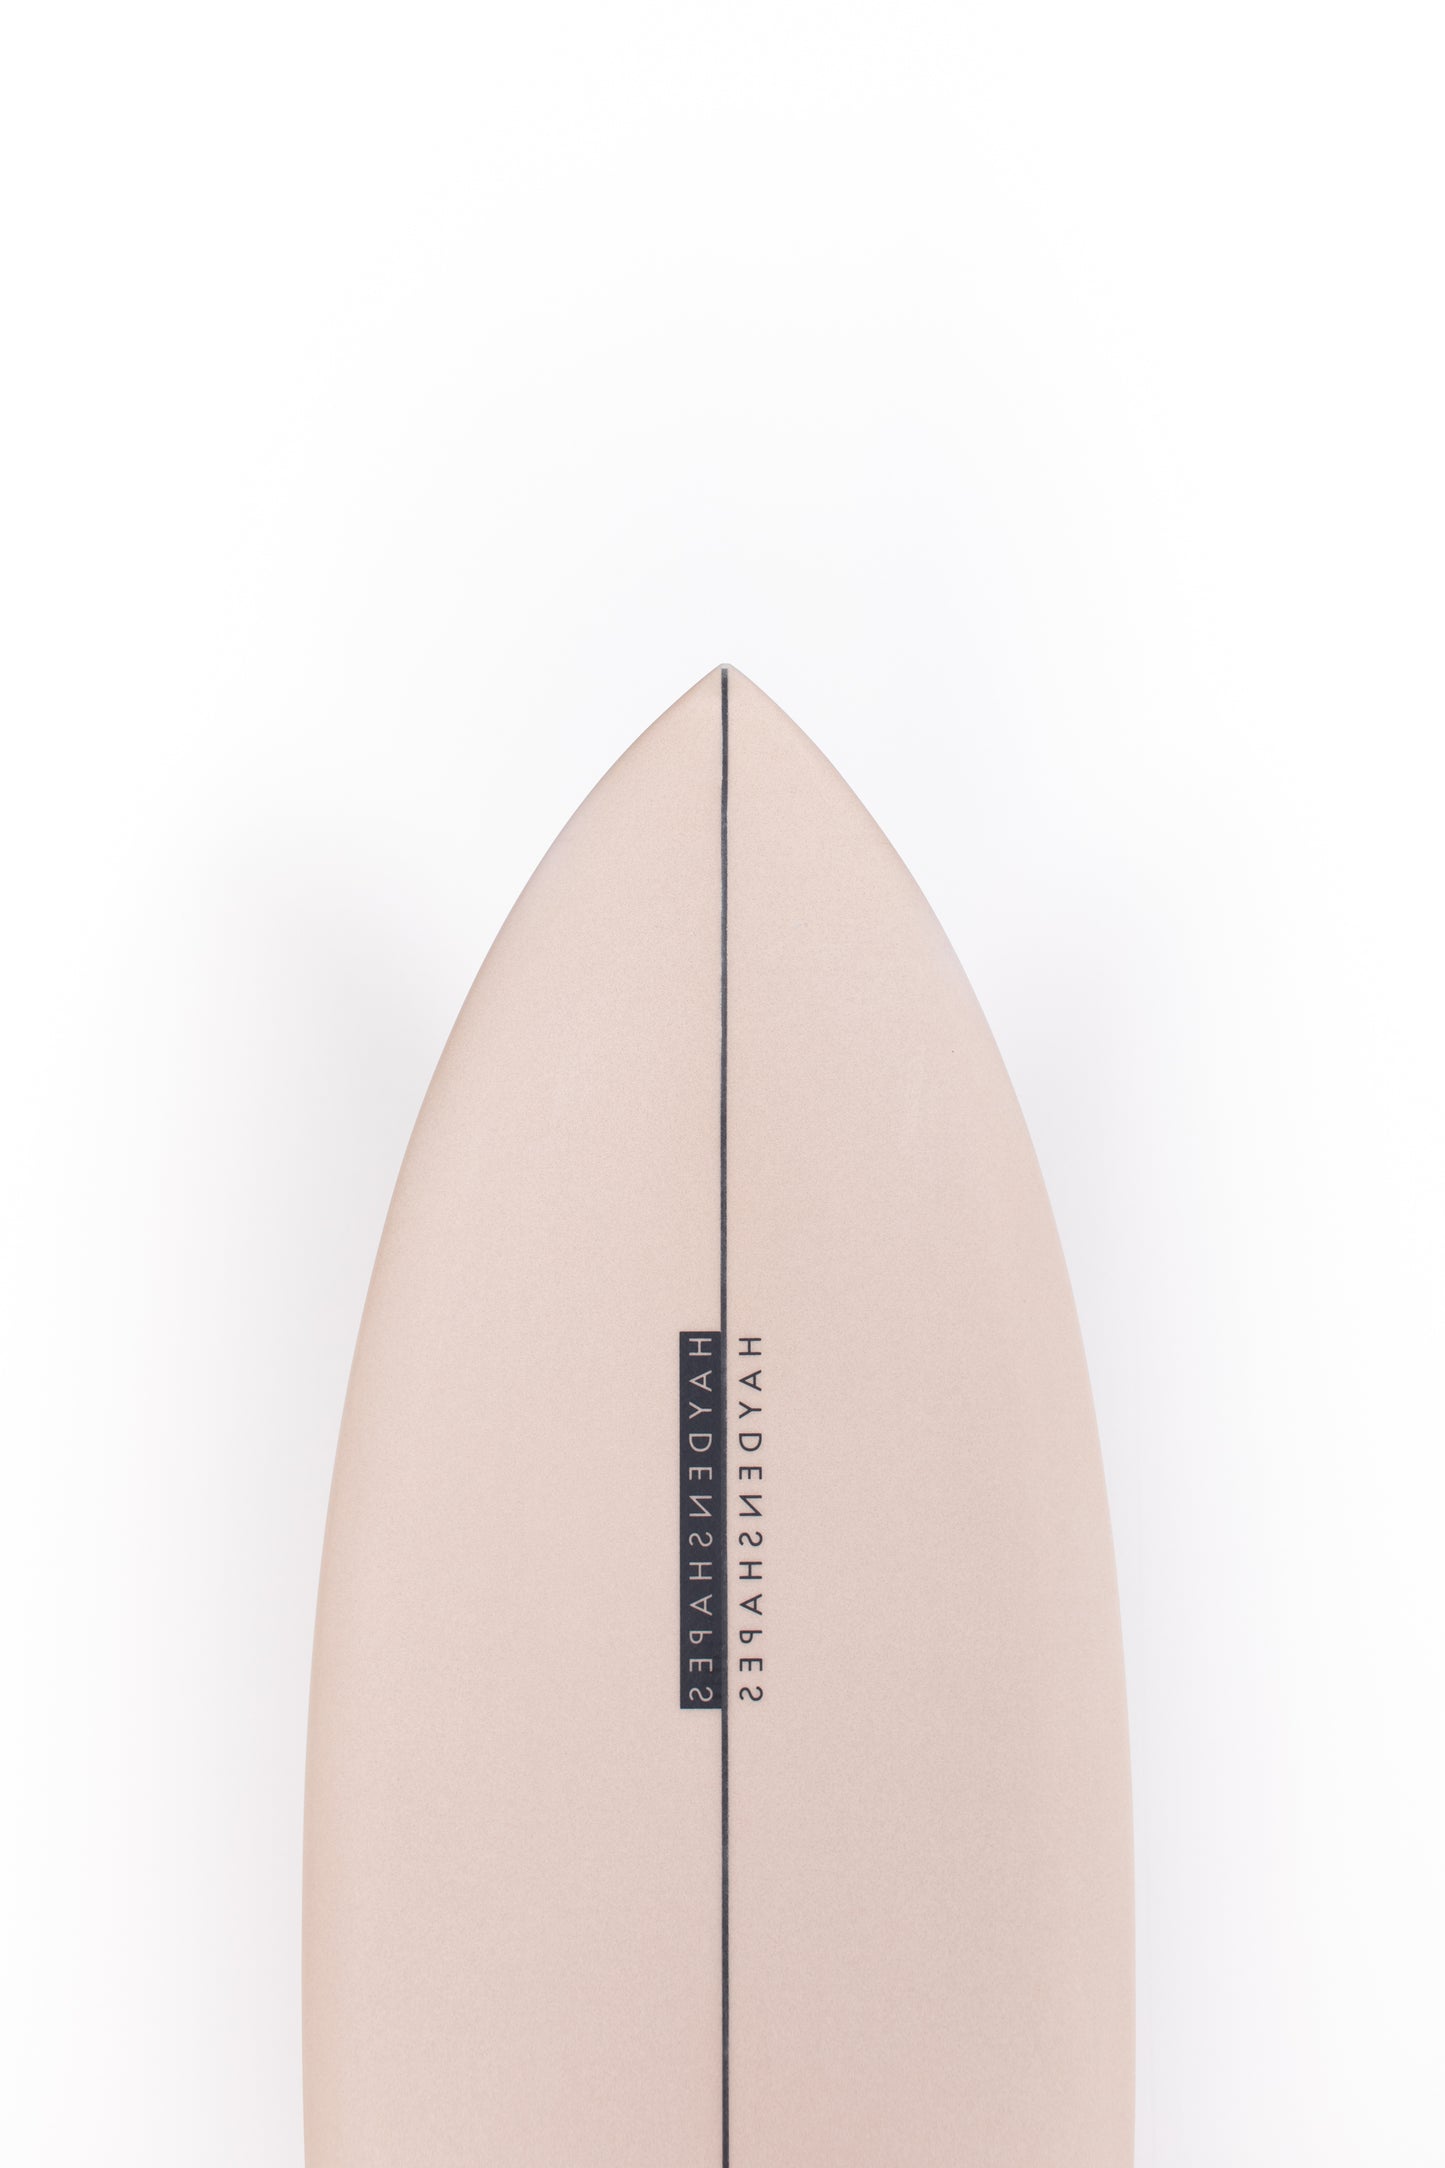 
                  
                    Pukas Surf Shop - HaydenShapes Surfboard - HYPTO KRYPTO TWIN PU - 5'6" X 19 3/4" X 2 3/8" - 28.43L
                  
                